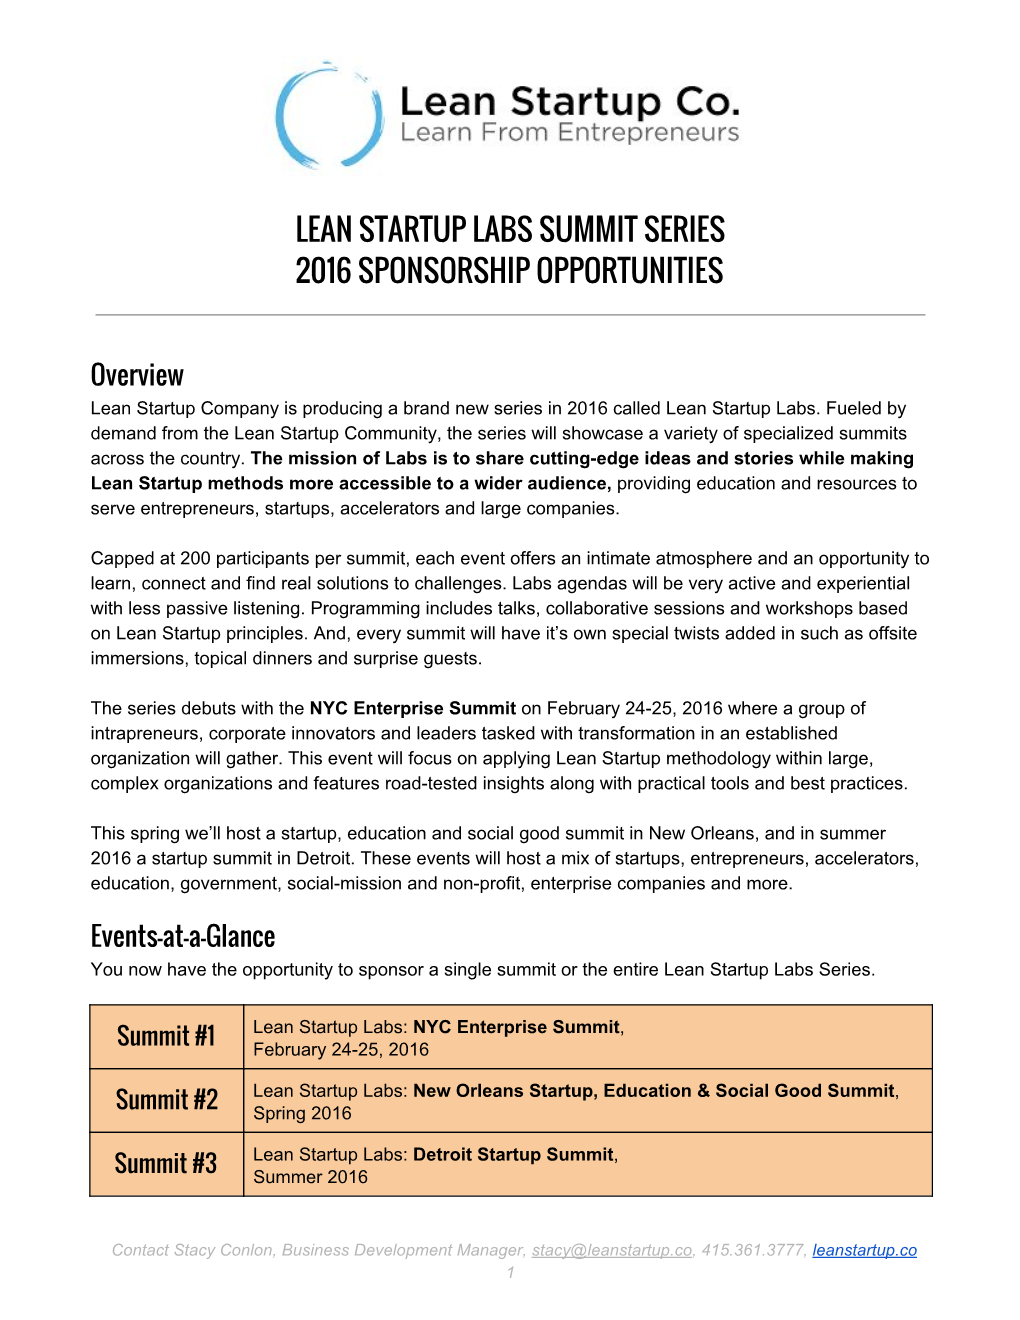 Lean Startup Labs Summit Series 2016 Sponsorship Opportunities